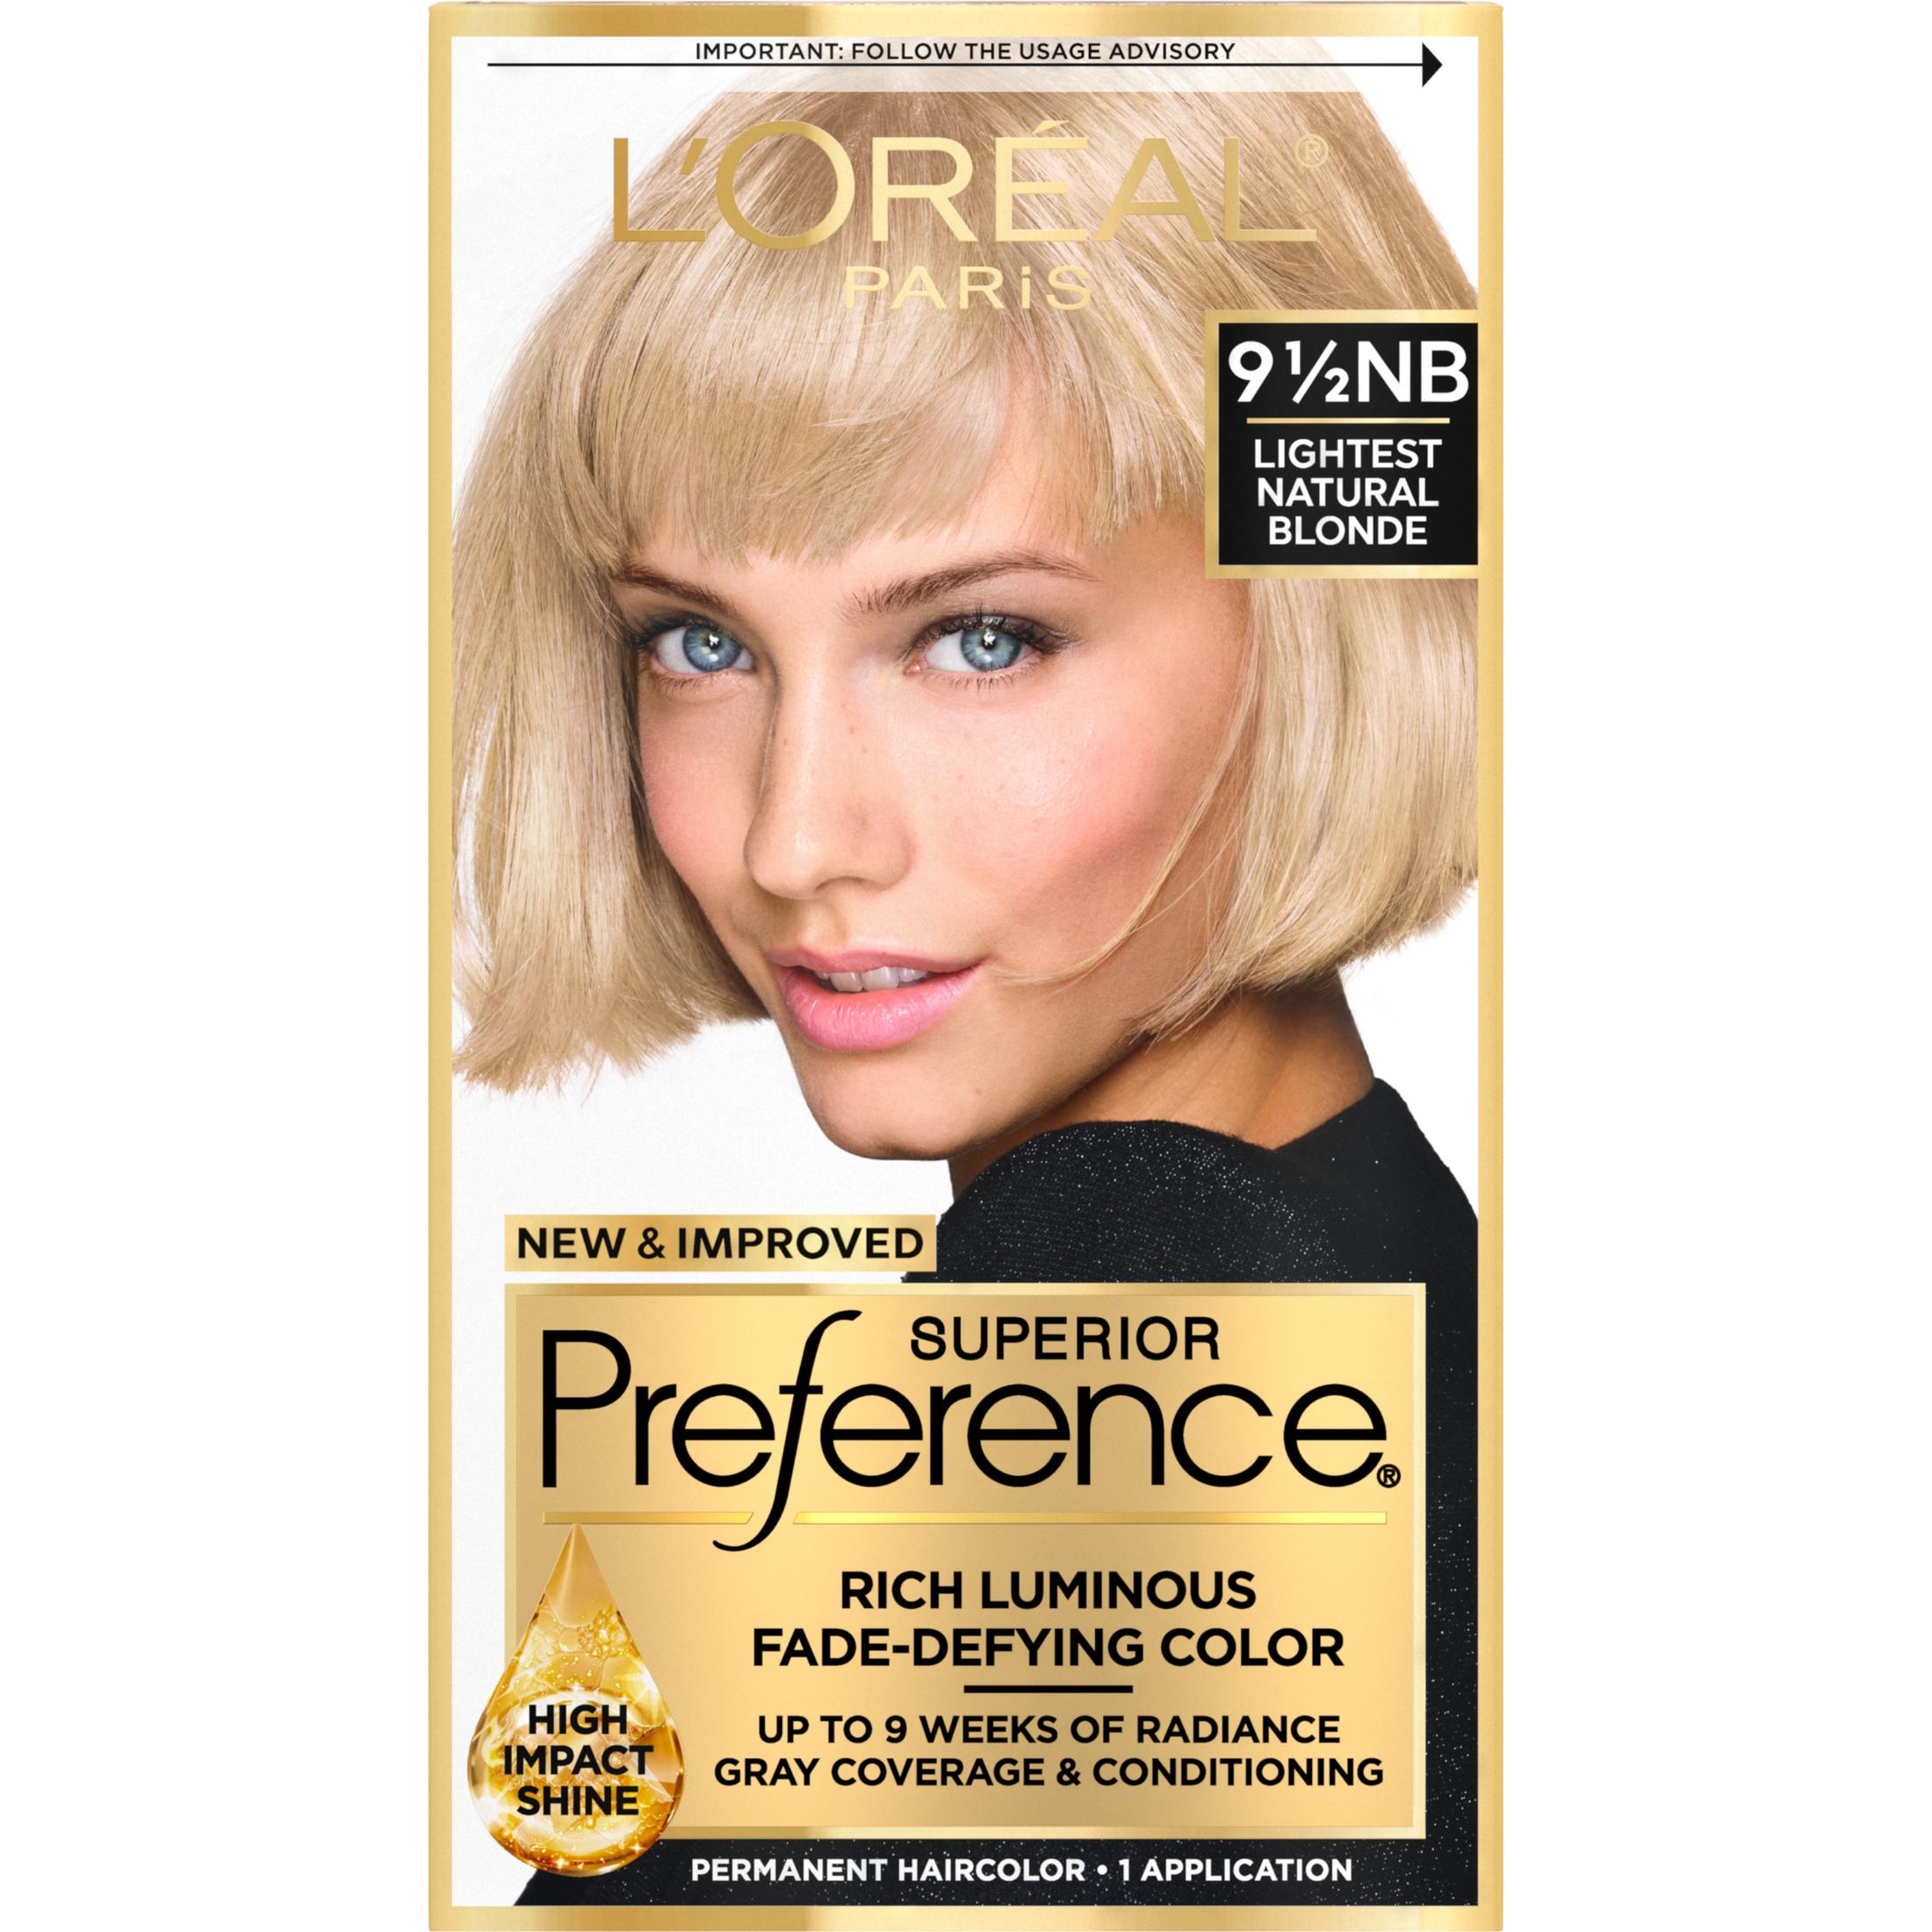 L'Oreal Paris Superior Preference Permanent Hair Color, 9.5NB Lightest Natural Blonde, 1 kit - image 1 of 9